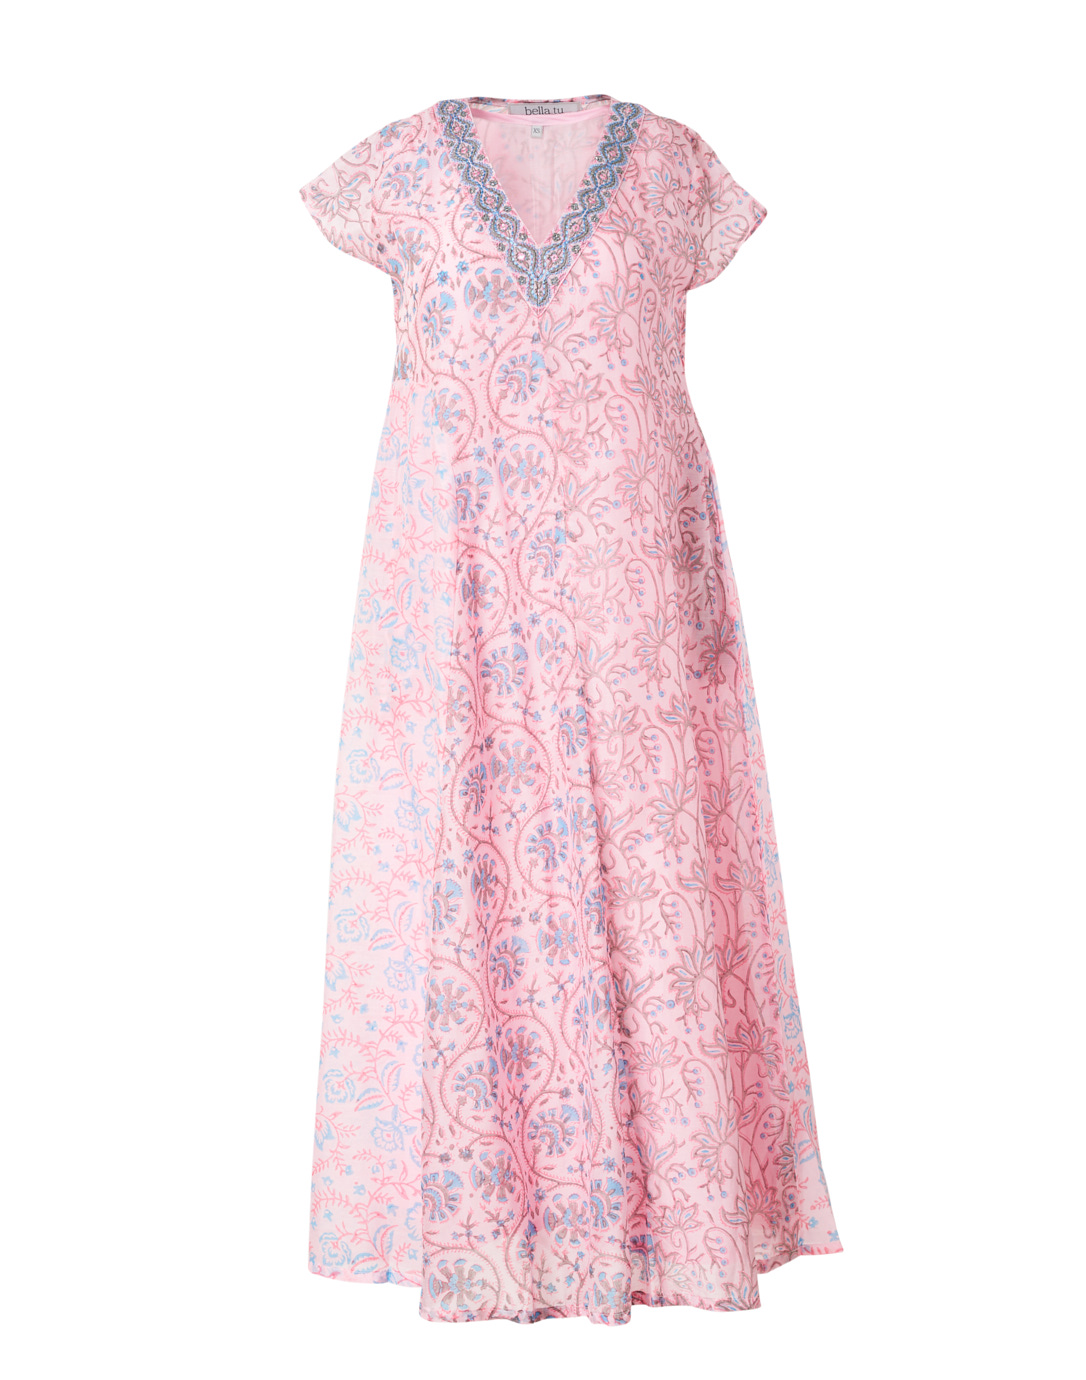 Cora Pink Floral Block Printed Dress | Bella Tu | Halsbrook